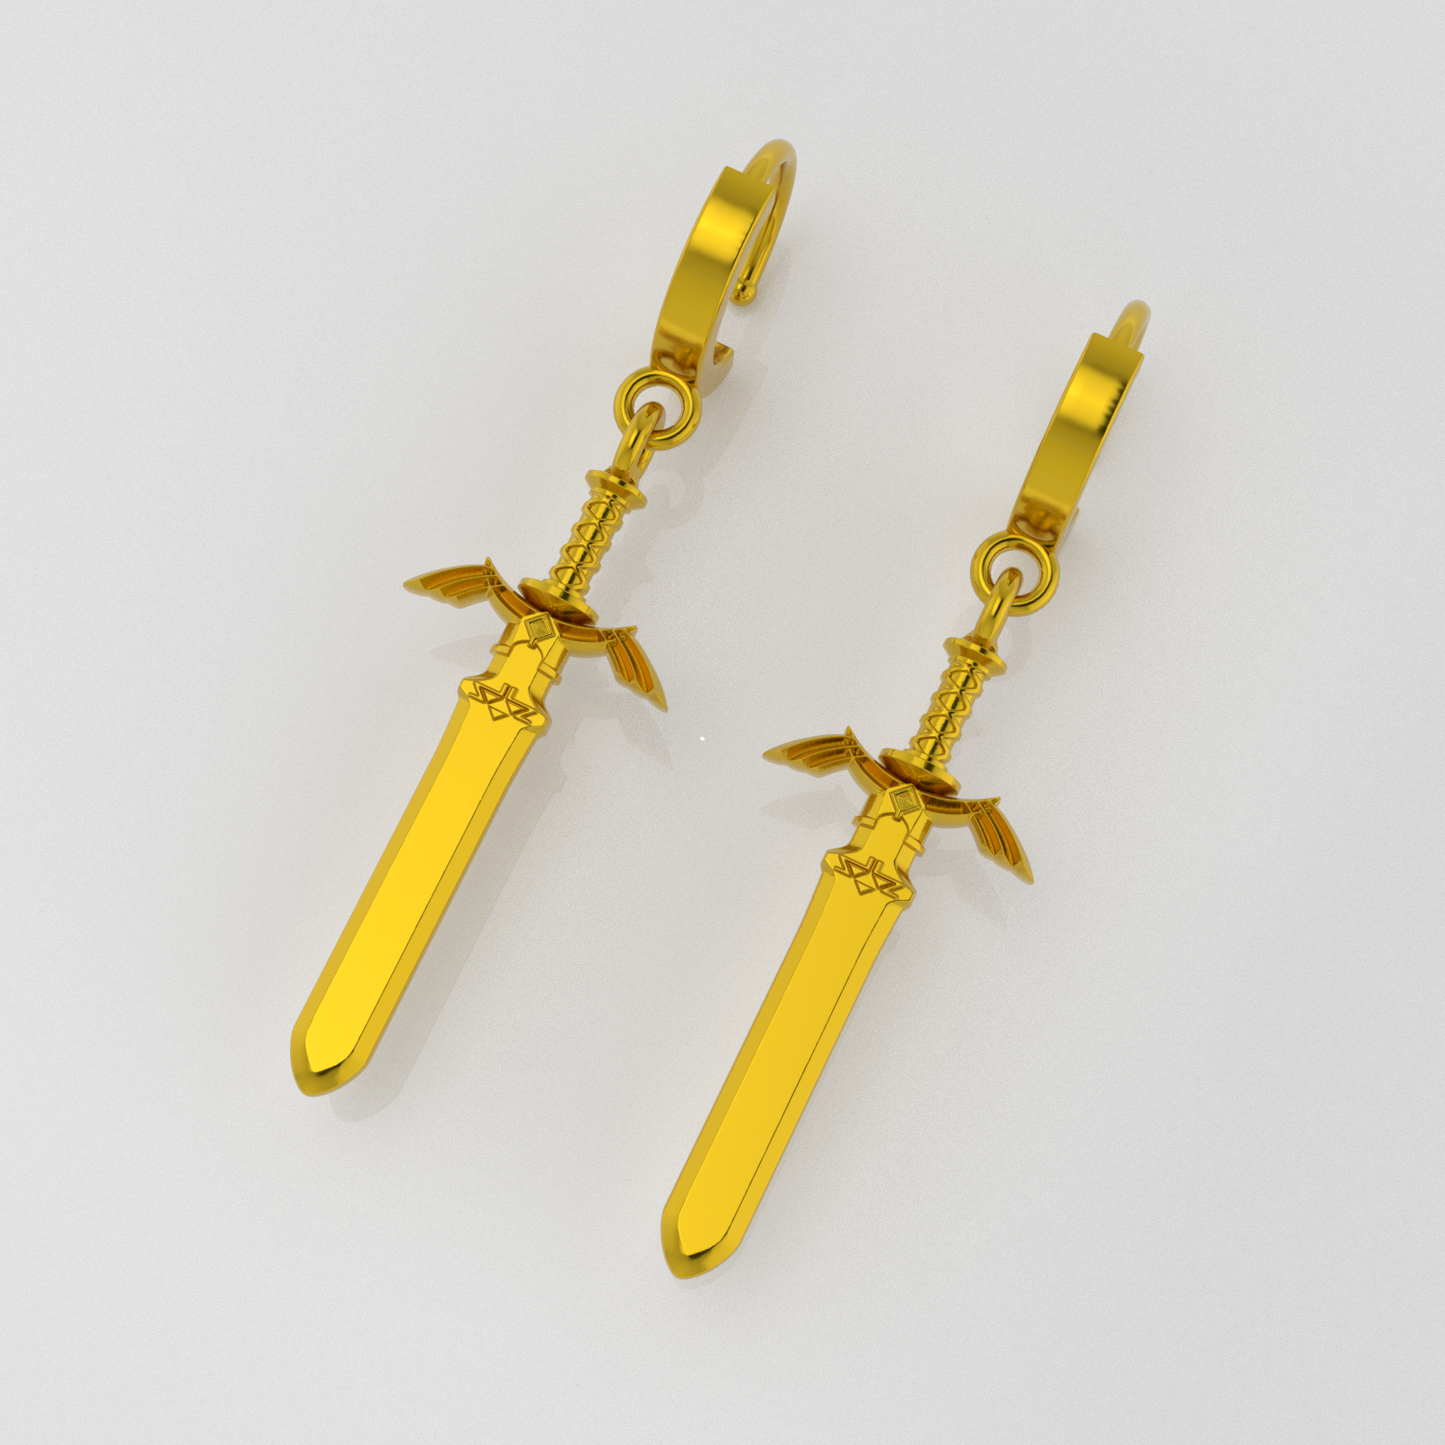 Master-sword Earrings